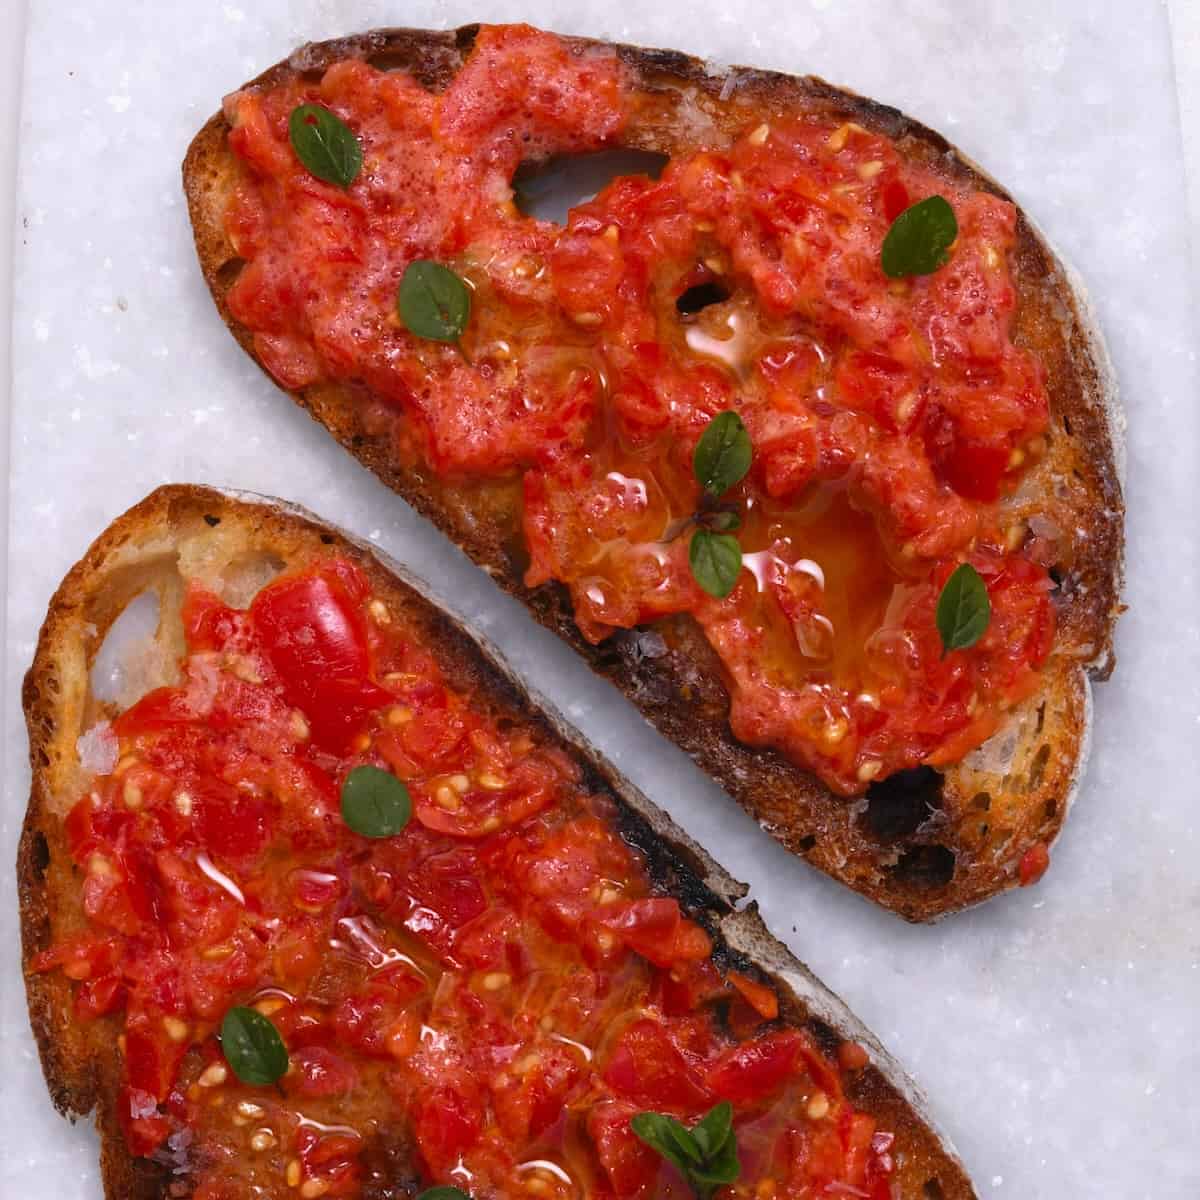 Pan con tomate - two tomato toasts